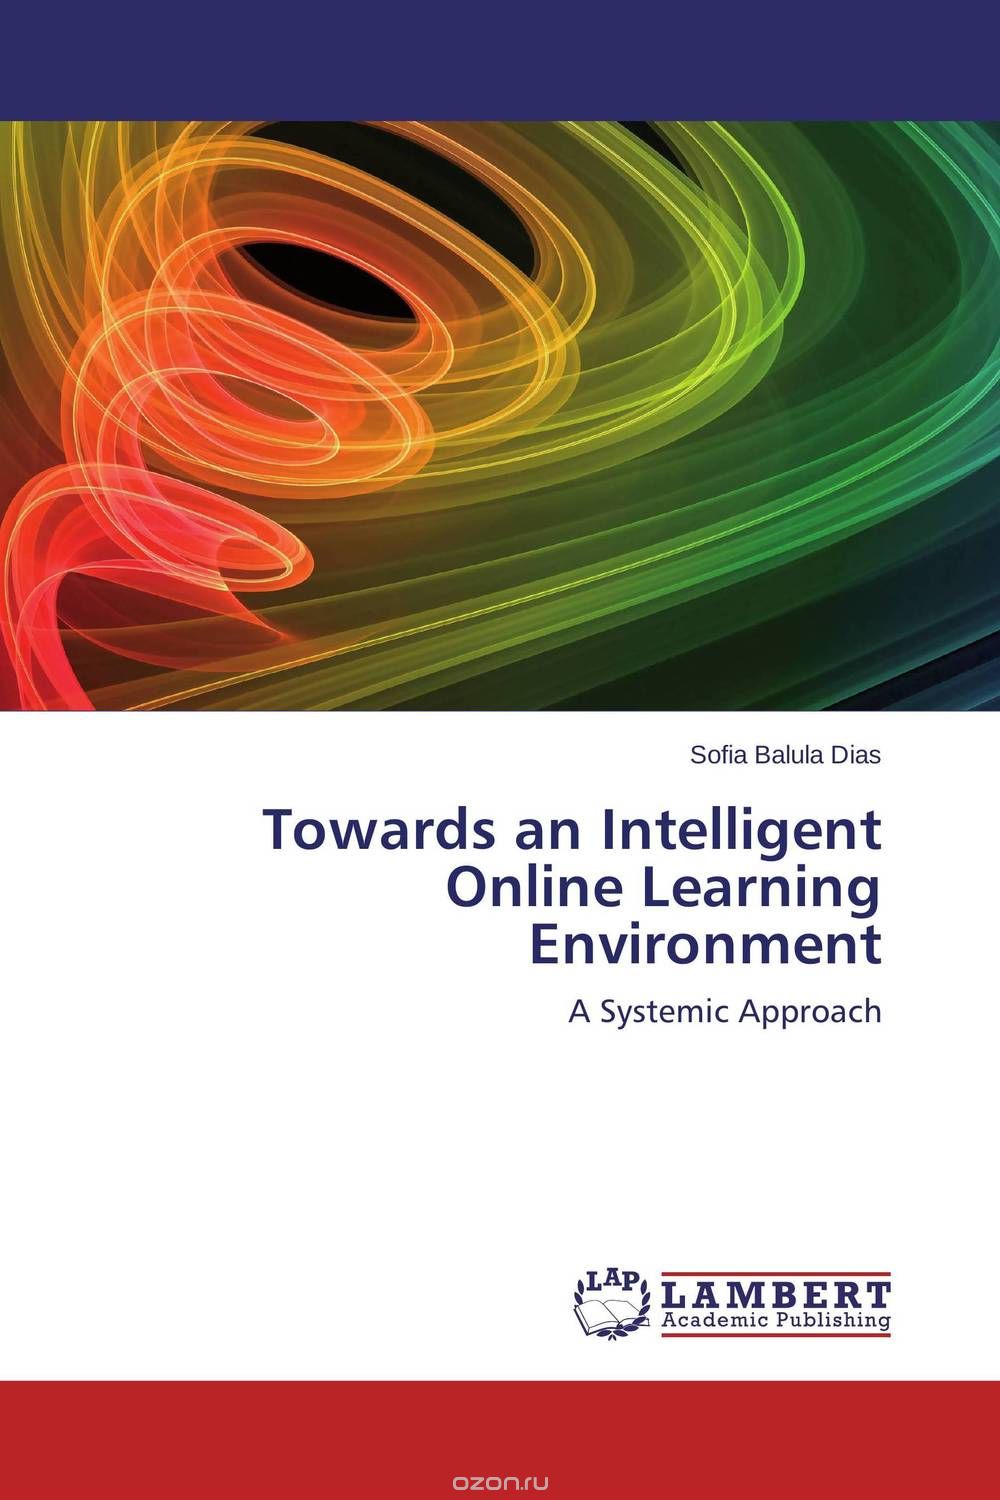 Скачать книгу "Towards an Intelligent Online Learning Environment"